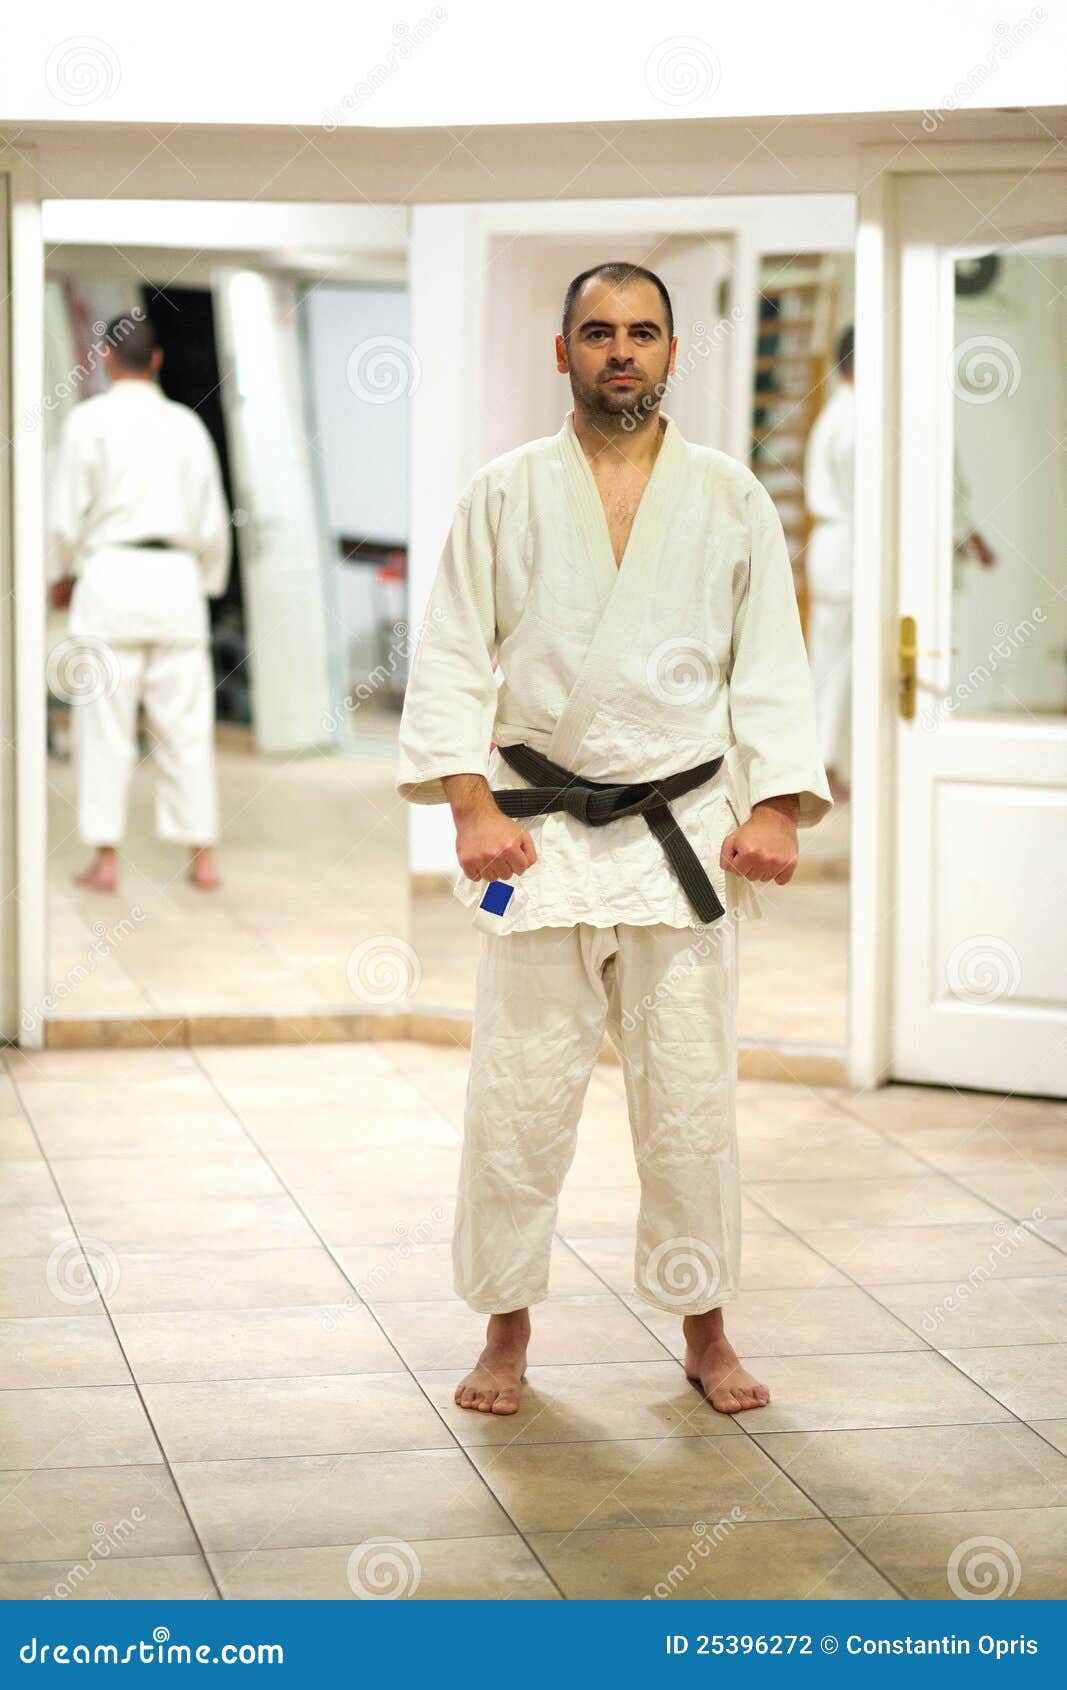 Martial Arts Instructor 25396272 